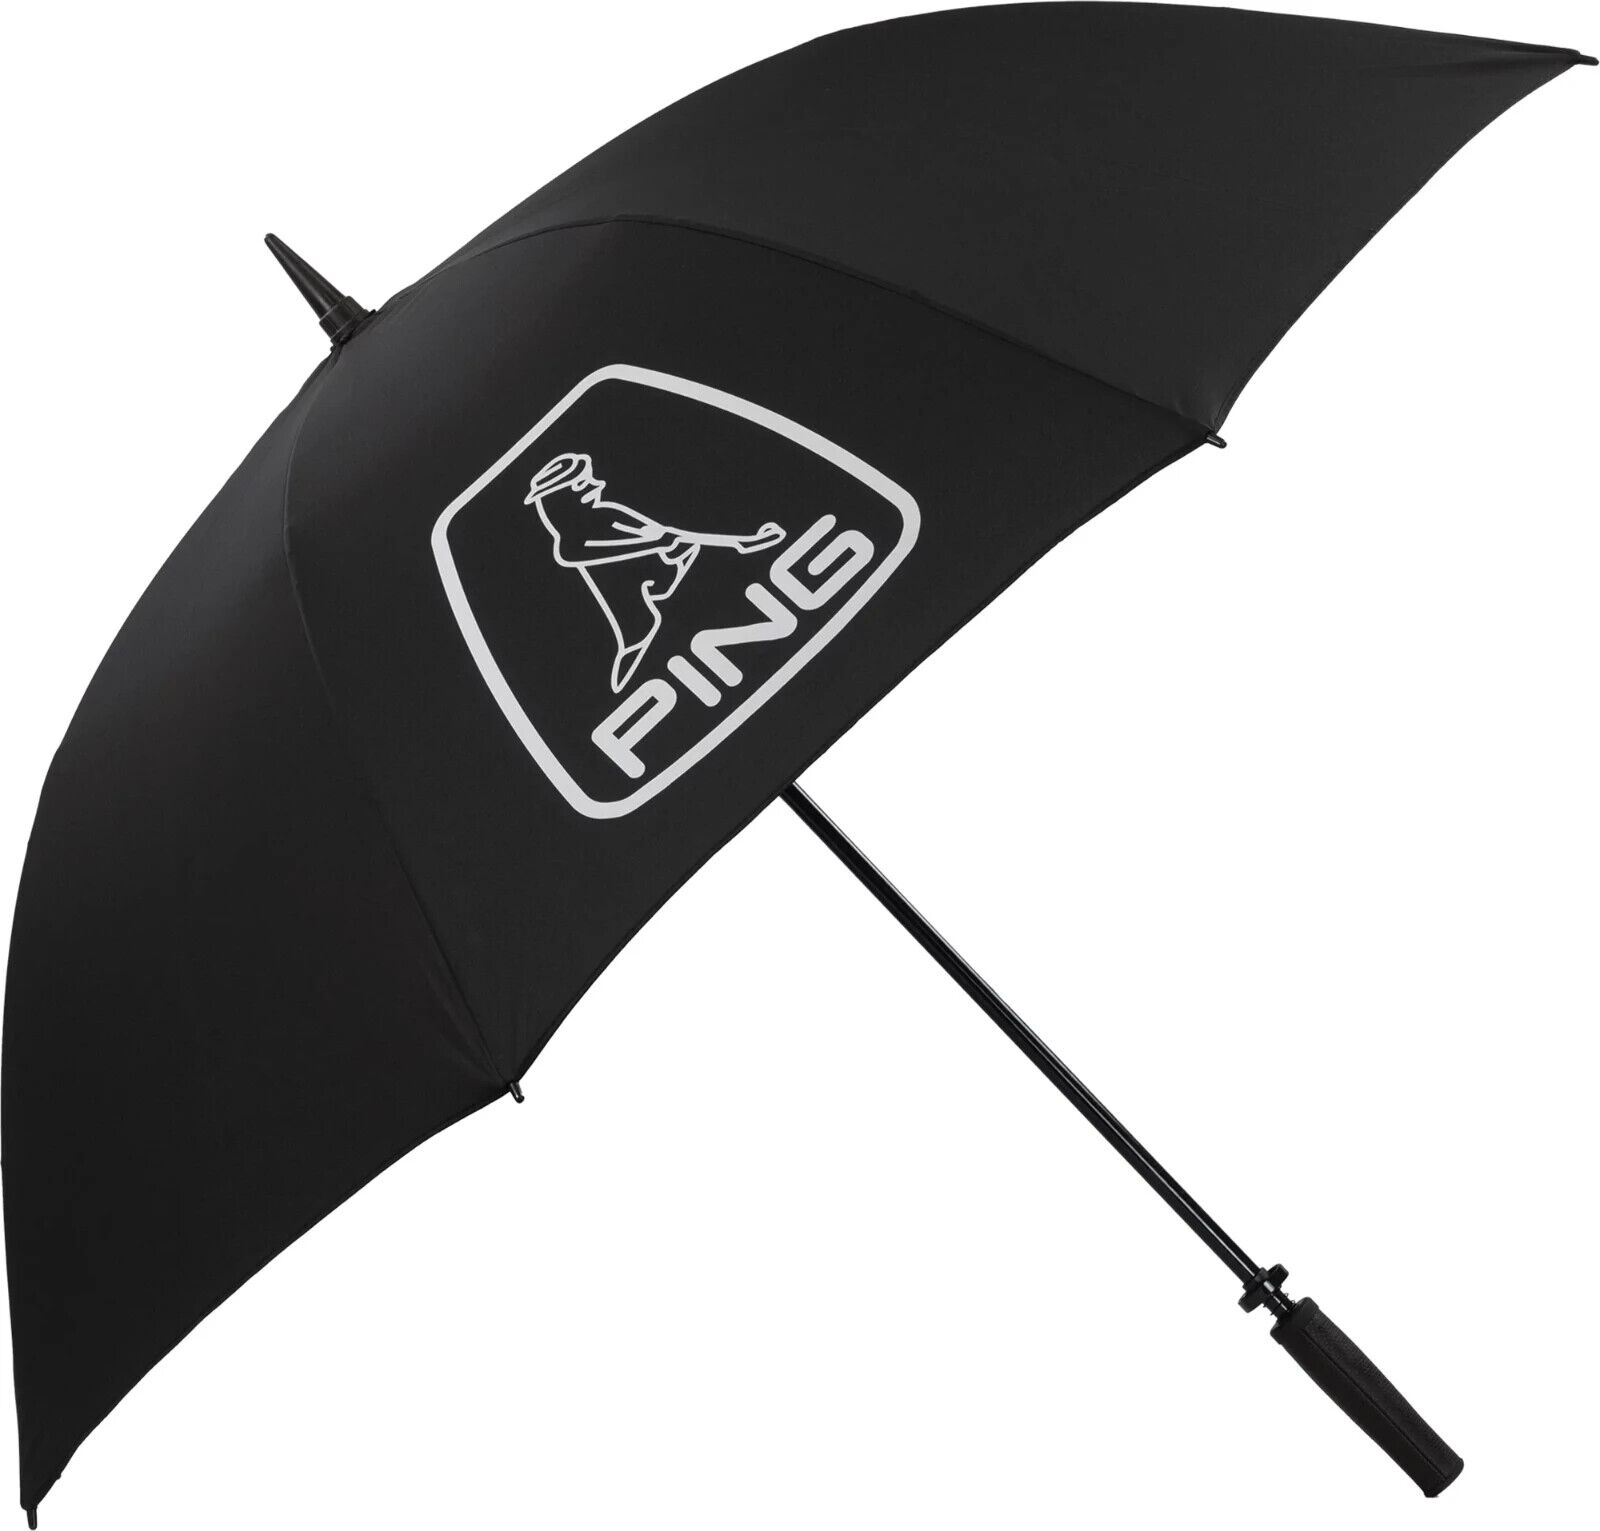 New Ping Black Single Canopy Tour Umbrella